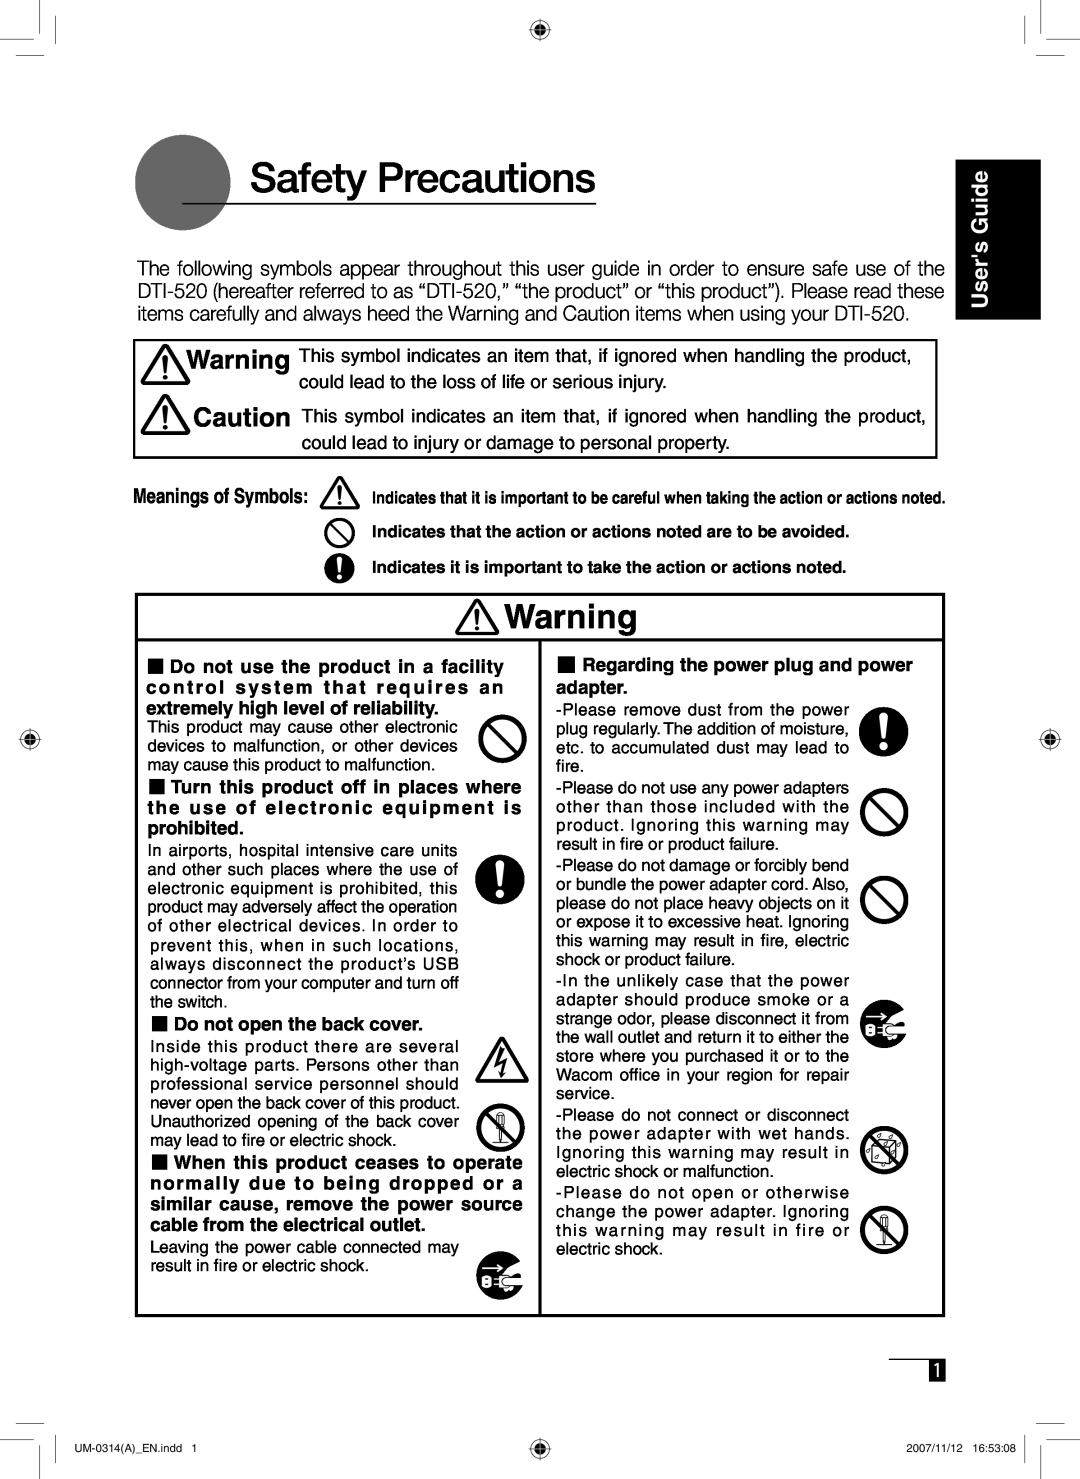 Wacom DTI-520 manual Safety Precautions, Users Guide 